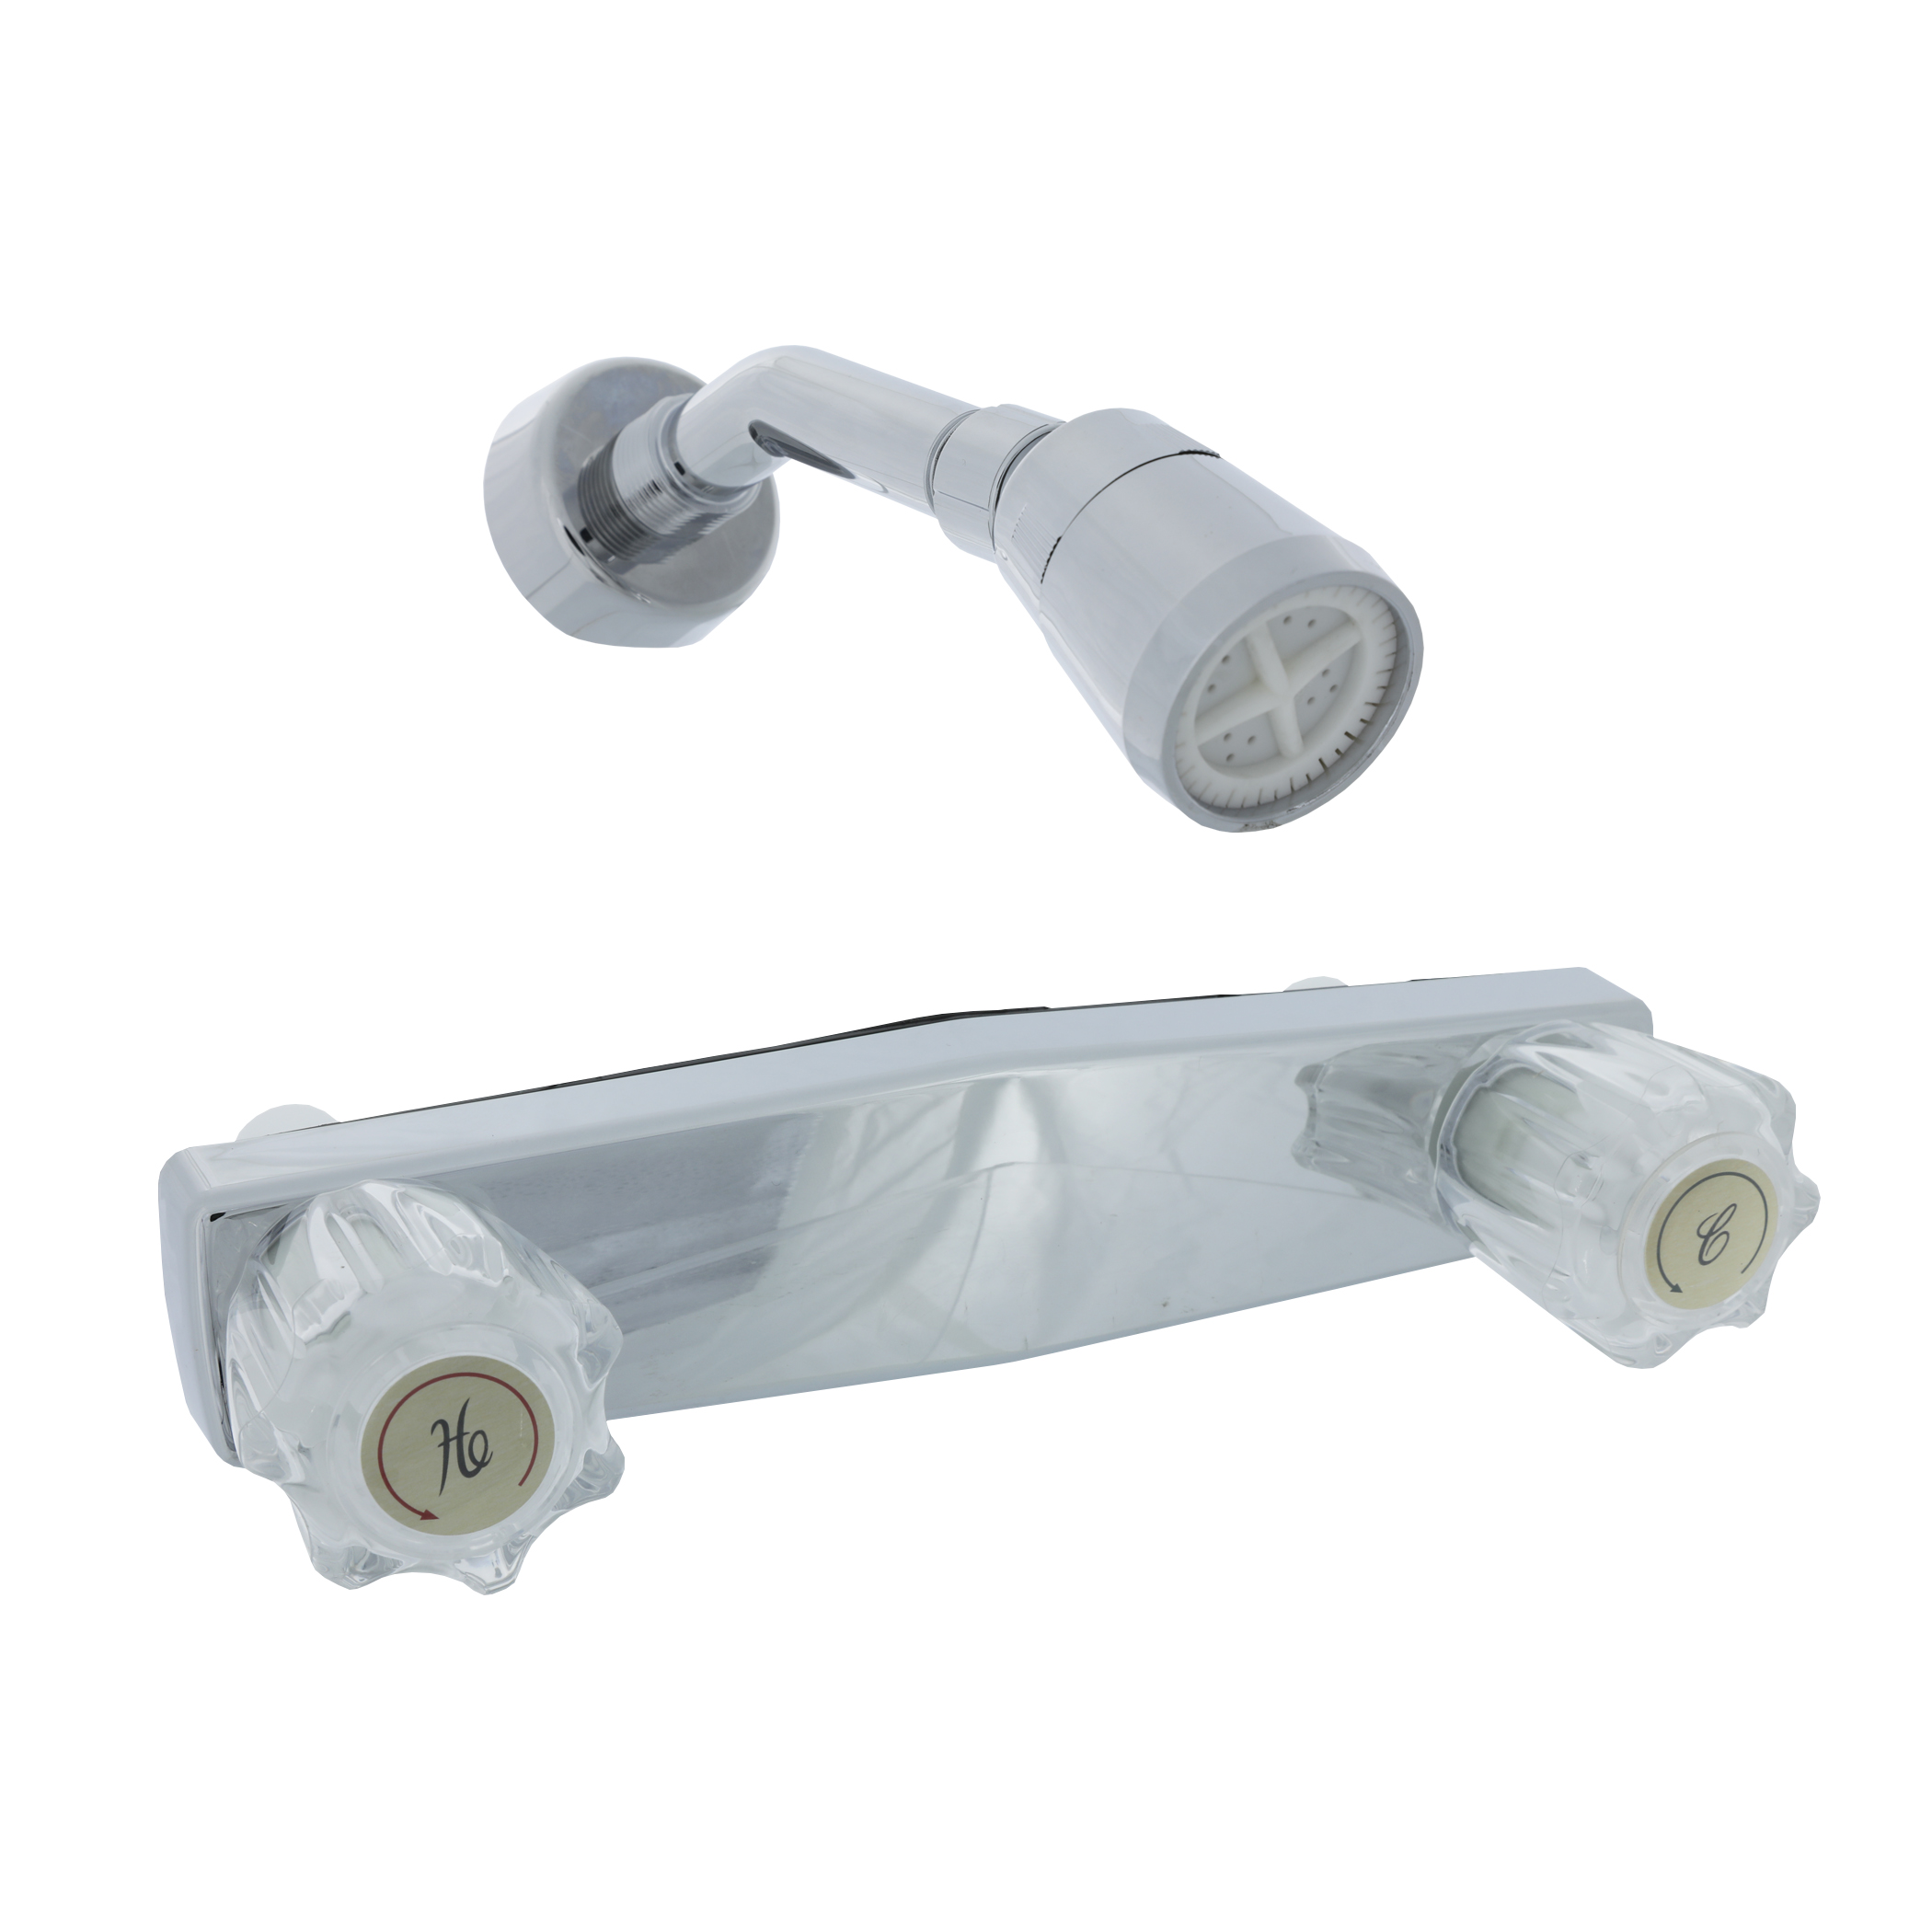 8" Mobile Home Trailer RV Chrome Finish Plastic Shower Faucet P-008PN NEW 